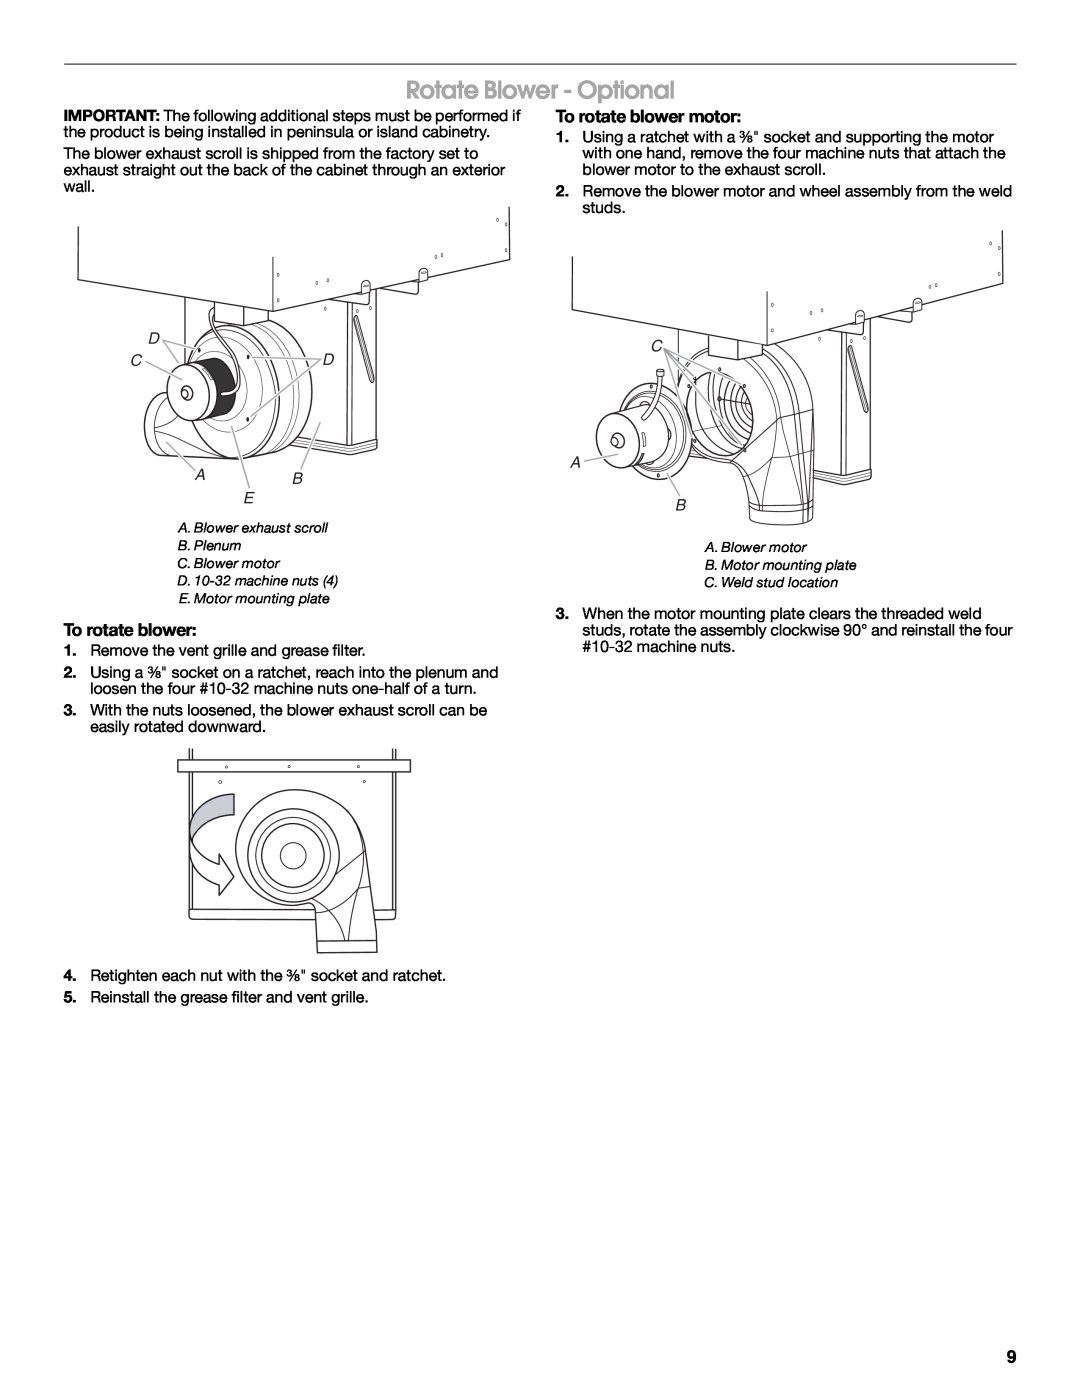 Jenn-Air W10298937A installation instructions Rotate Blower - Optional, To rotate blower motor, D C D Ab E, C A B 